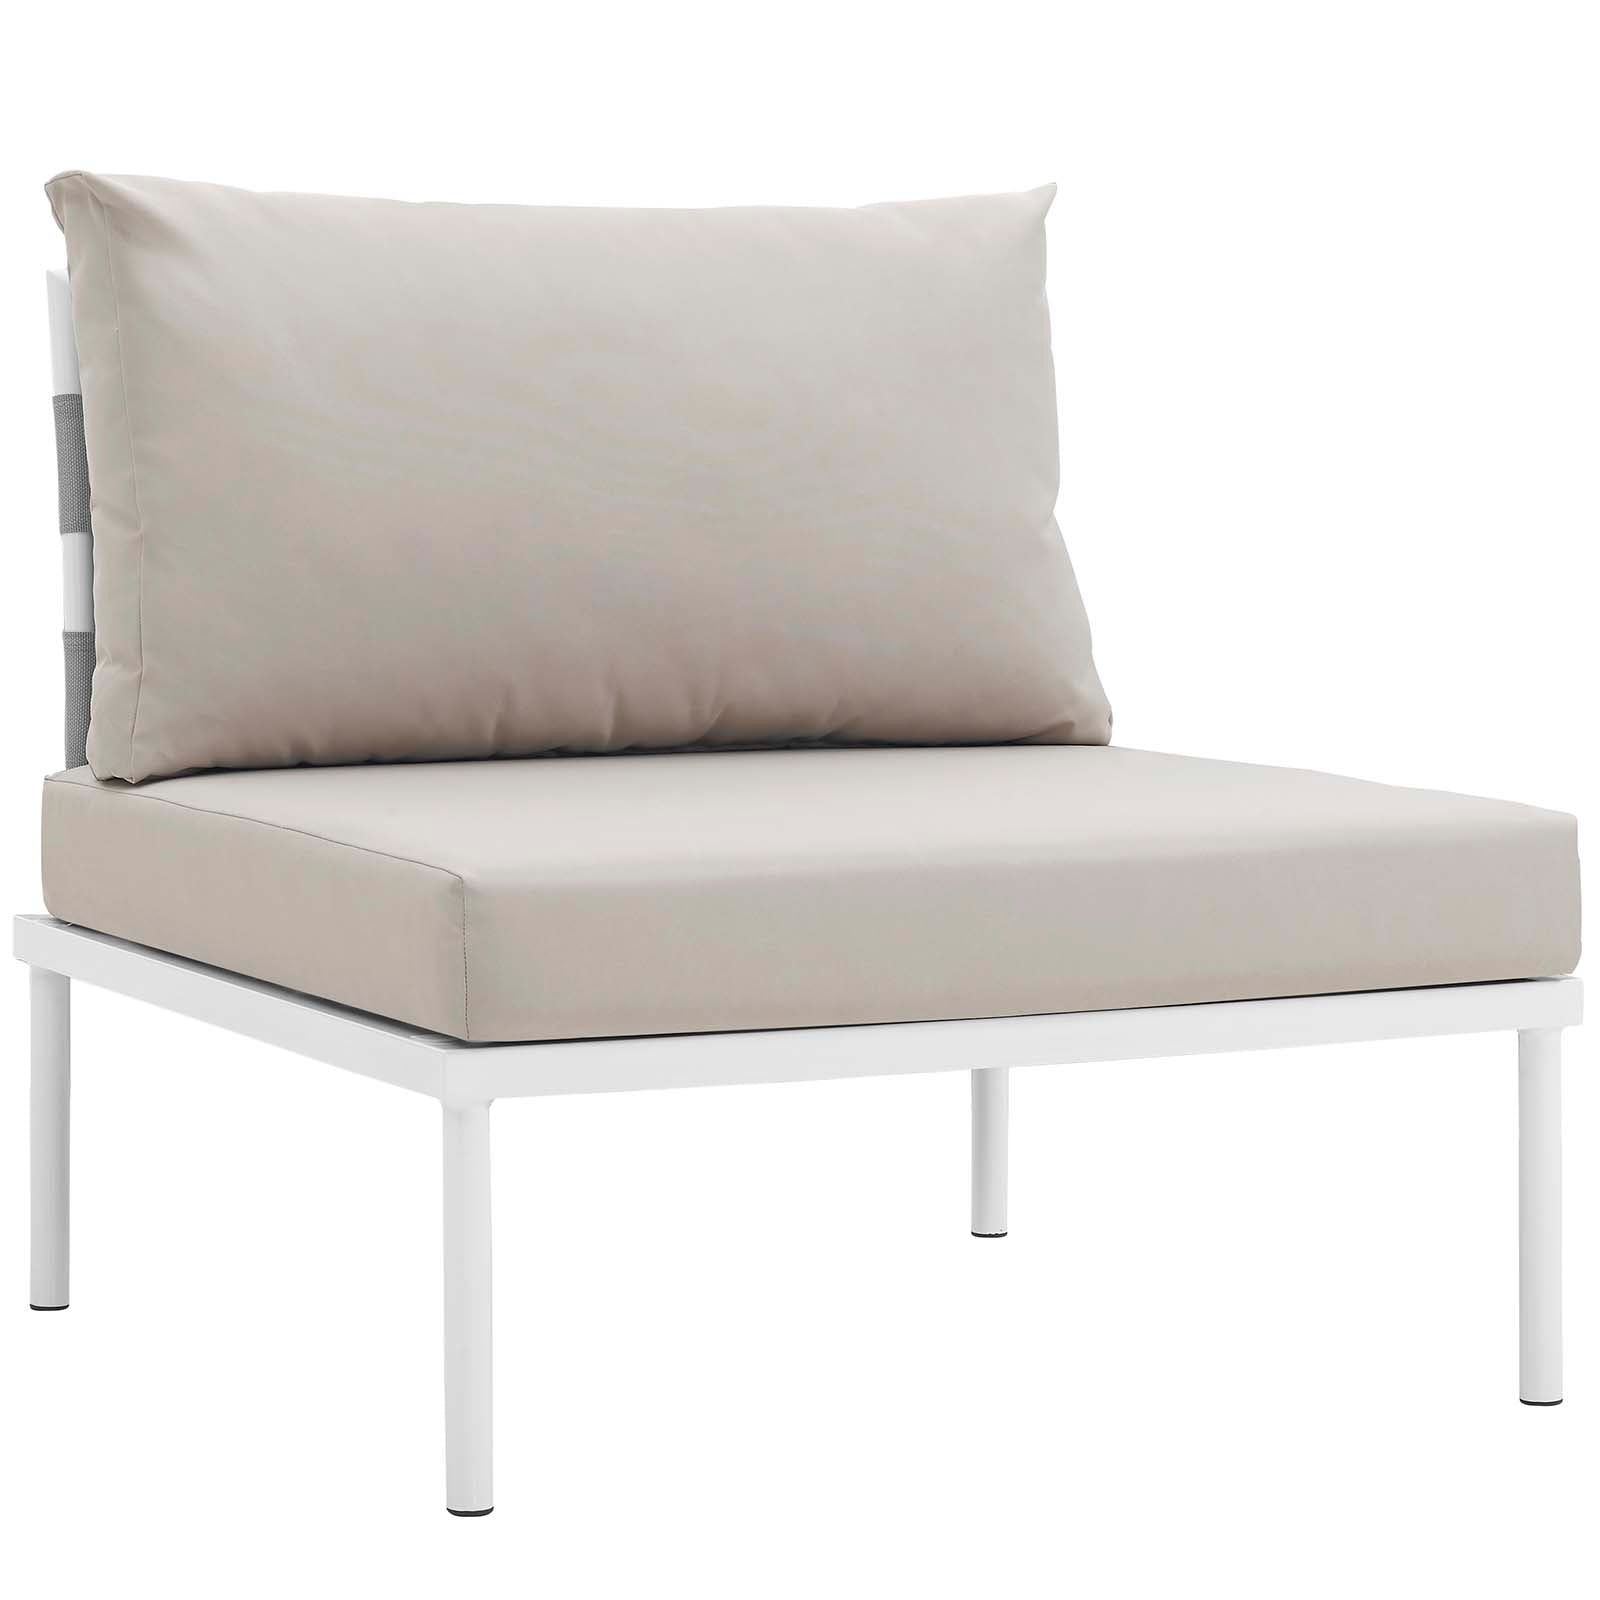 Harmony 5 Piece Outdoor Patio Aluminum Sectional Sofa Set-Outdoor Set-Modway-Wall2Wall Furnishings